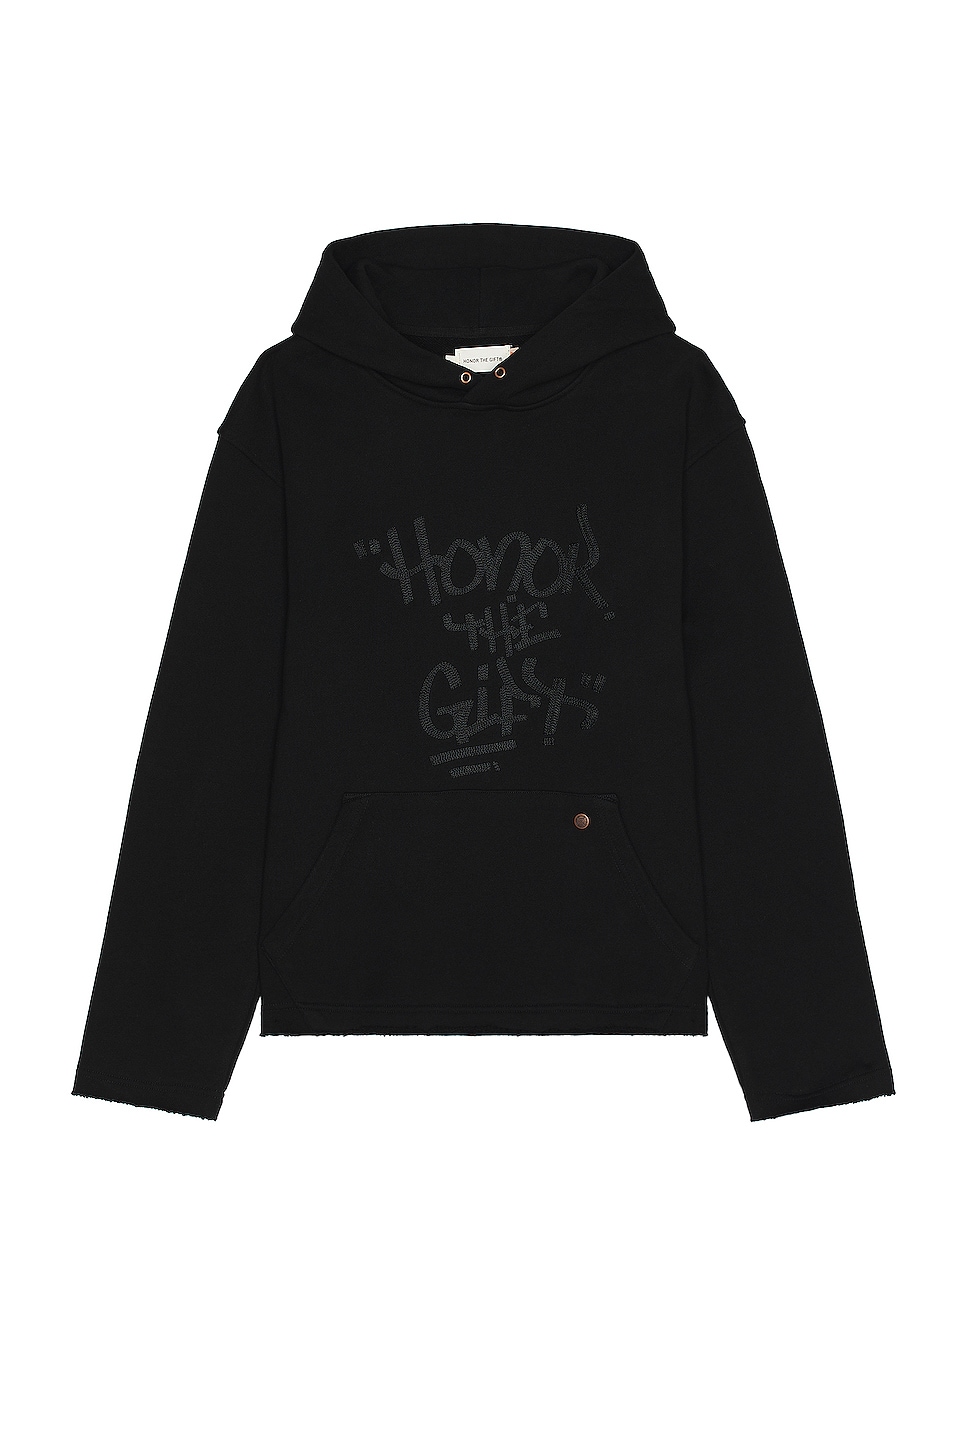 Script Embroidered Hoodie in Black